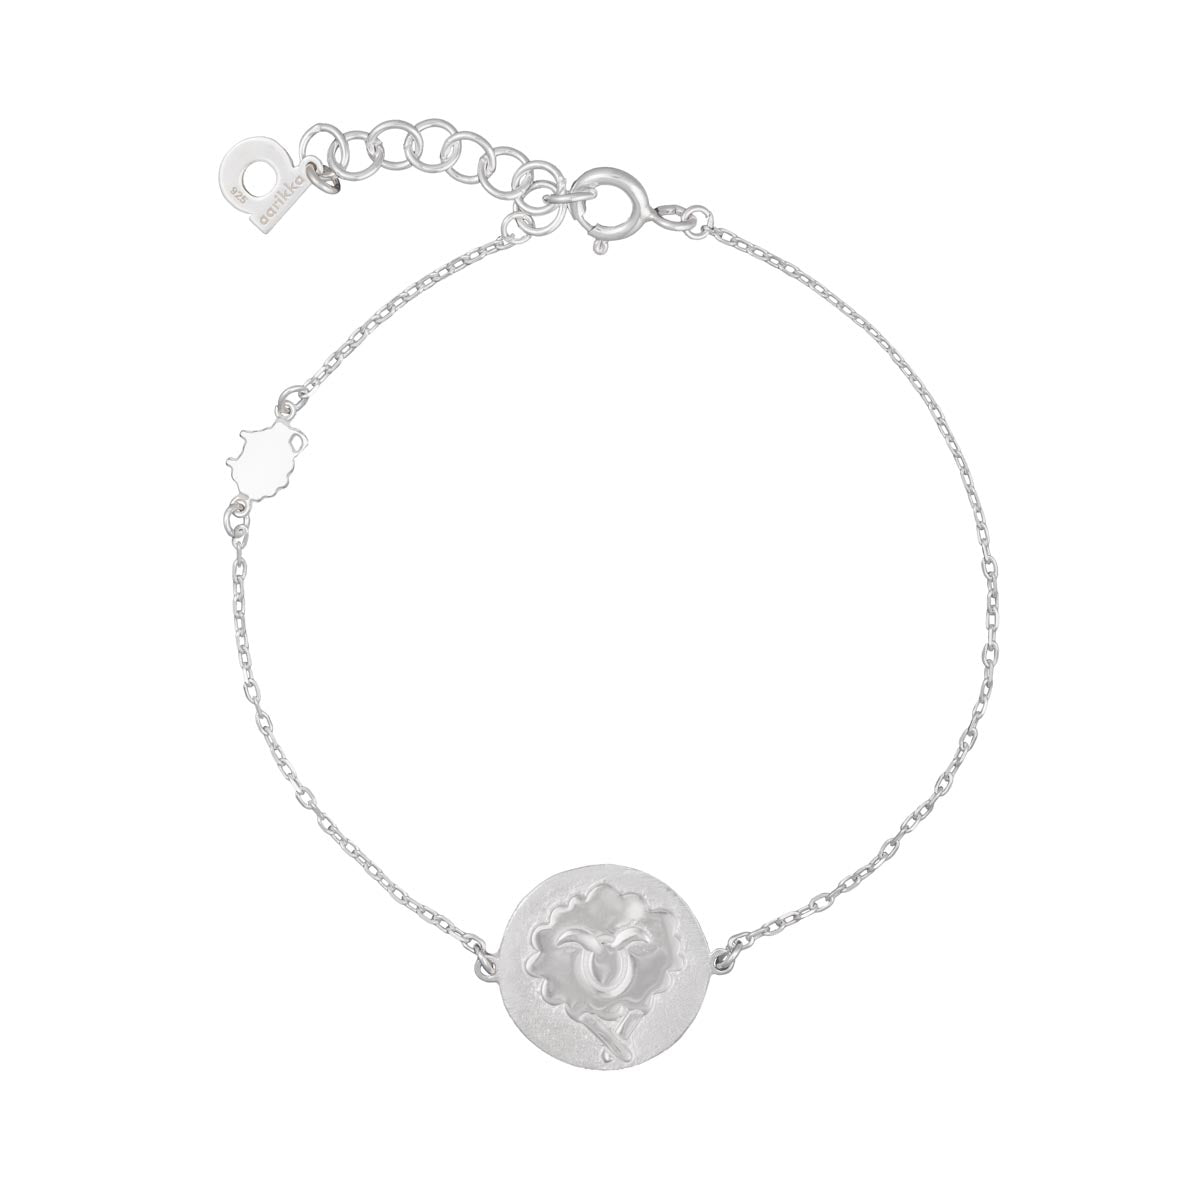 Virgo bracelet, silver